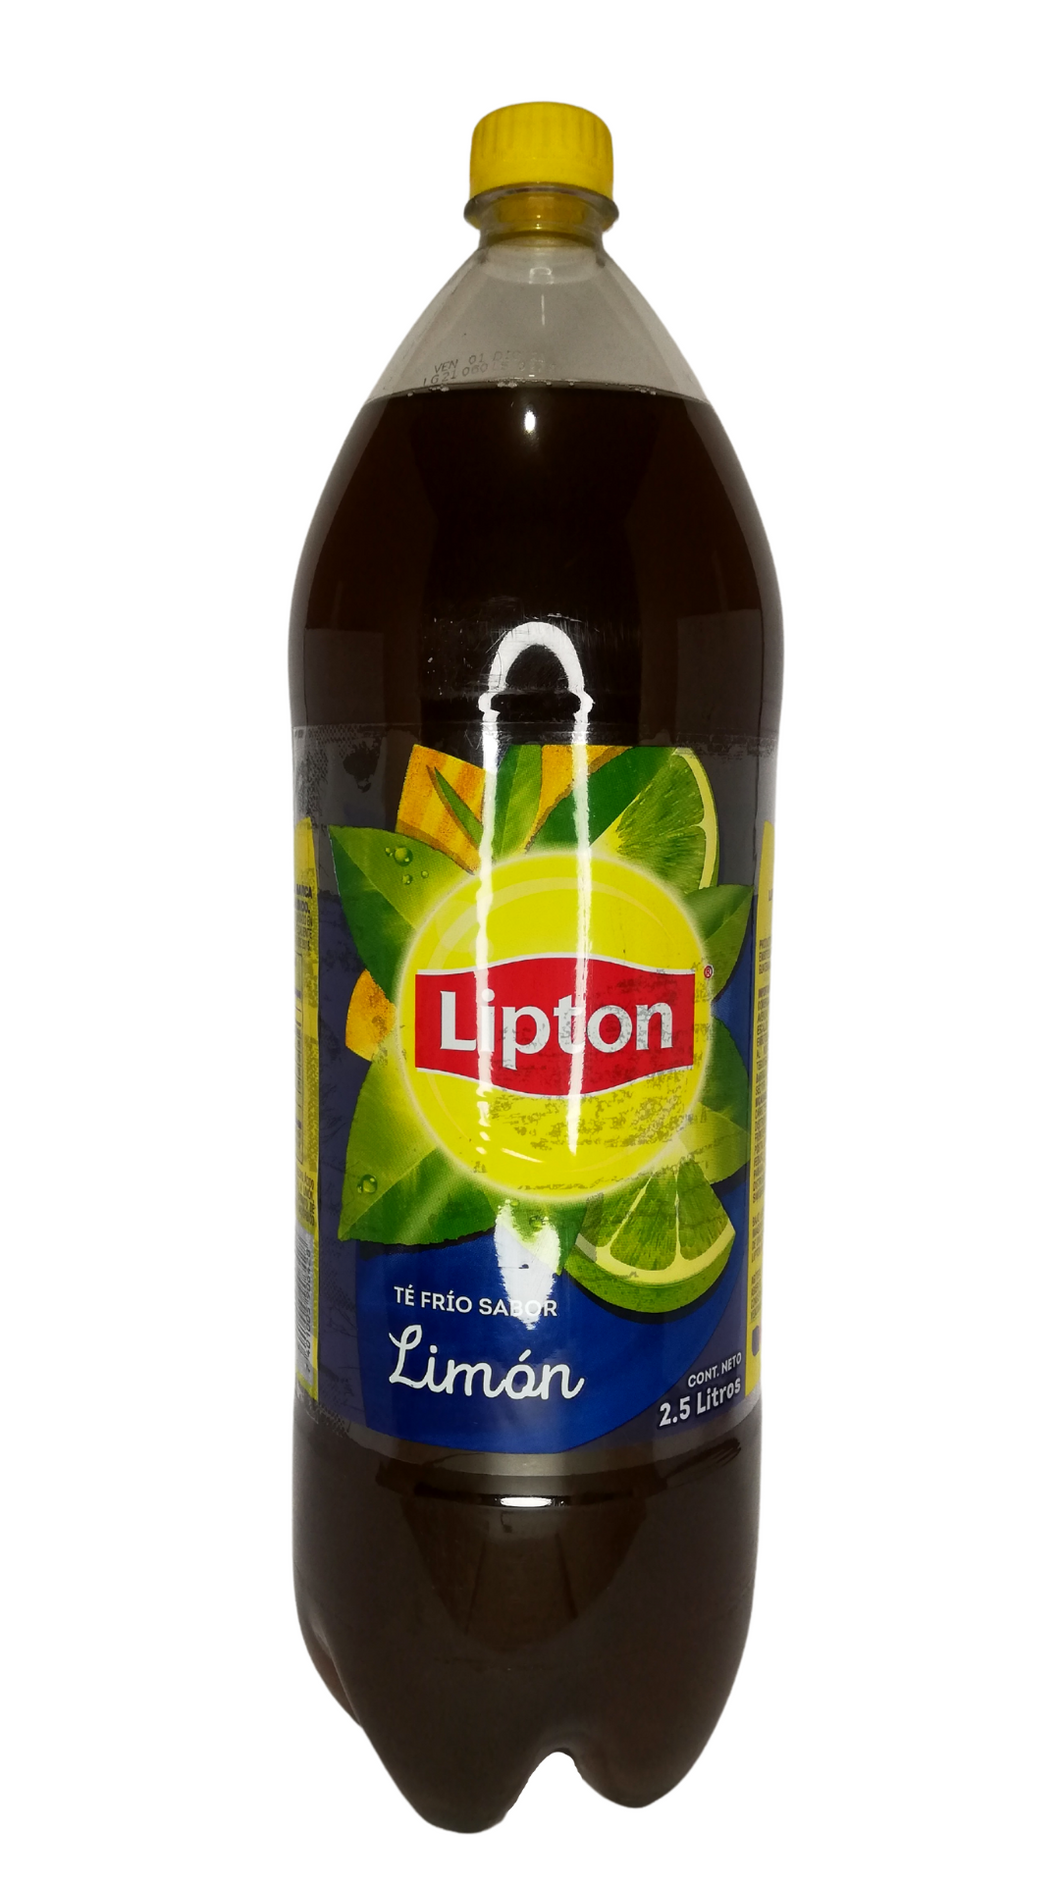 TE FRIO LIMON LIPTON 2.5L